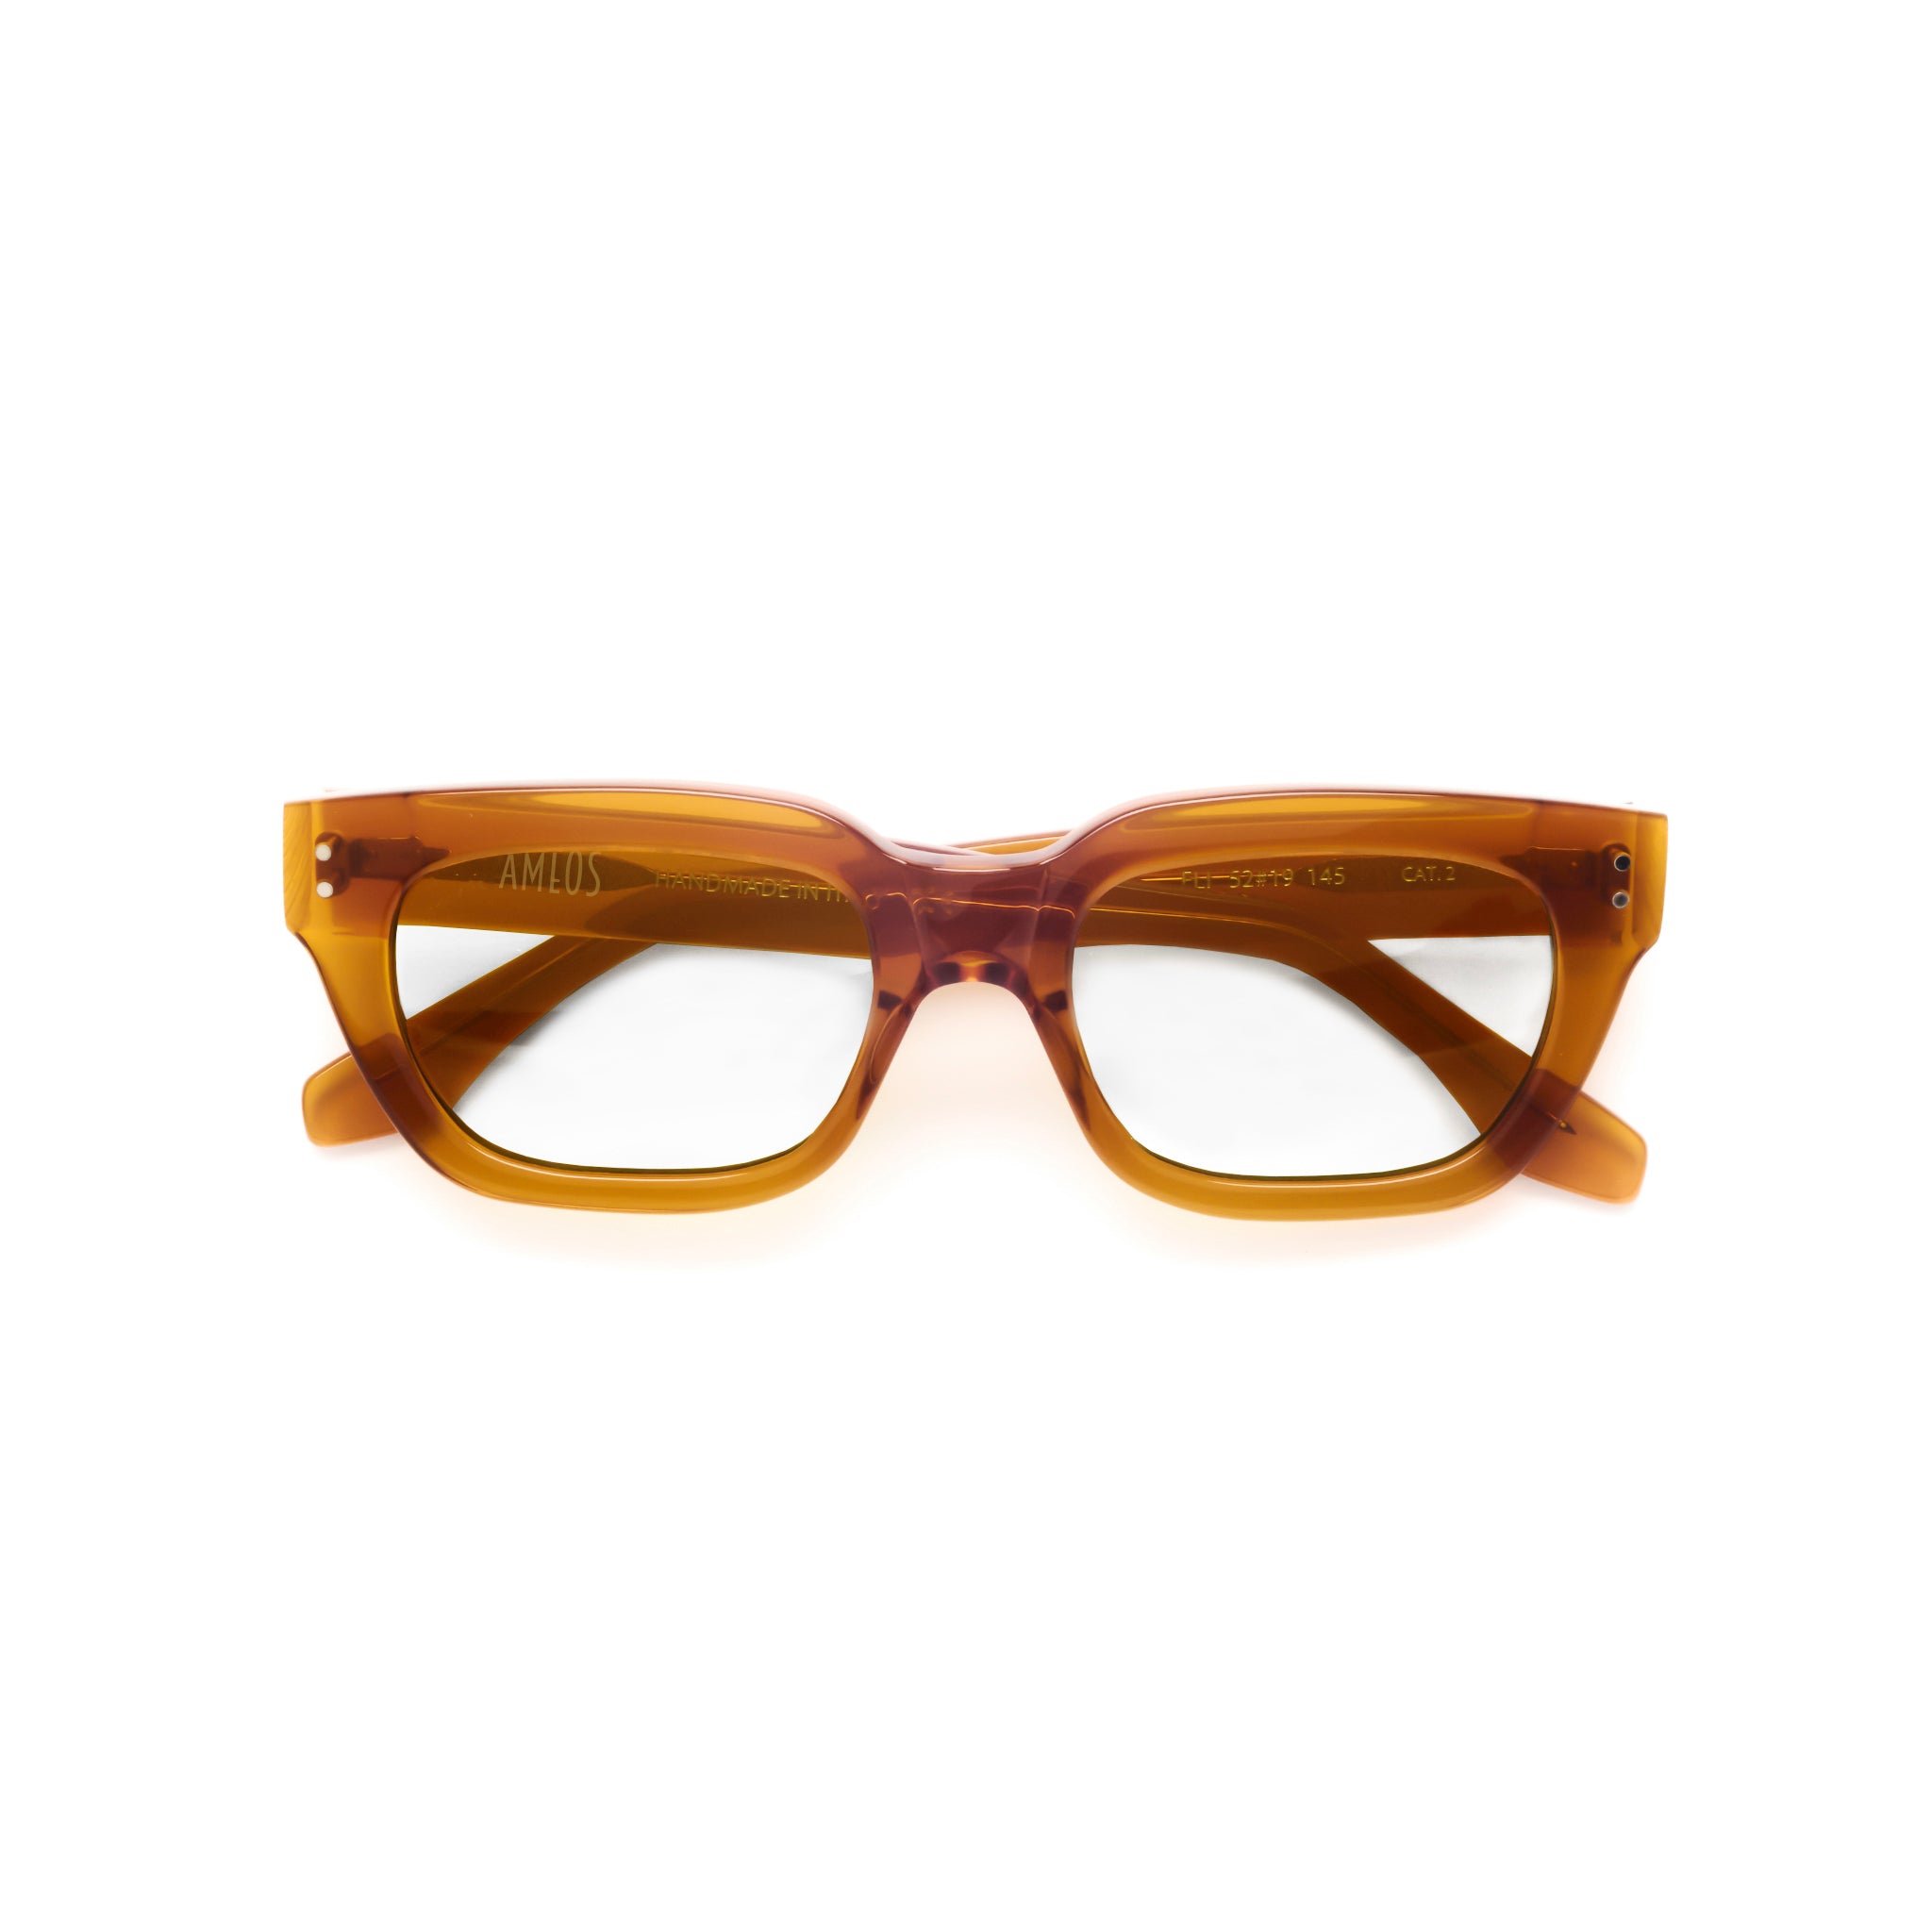 Ameos Forever collection Eli optical glasses. Transparent caramel frames, unisex eyewear.